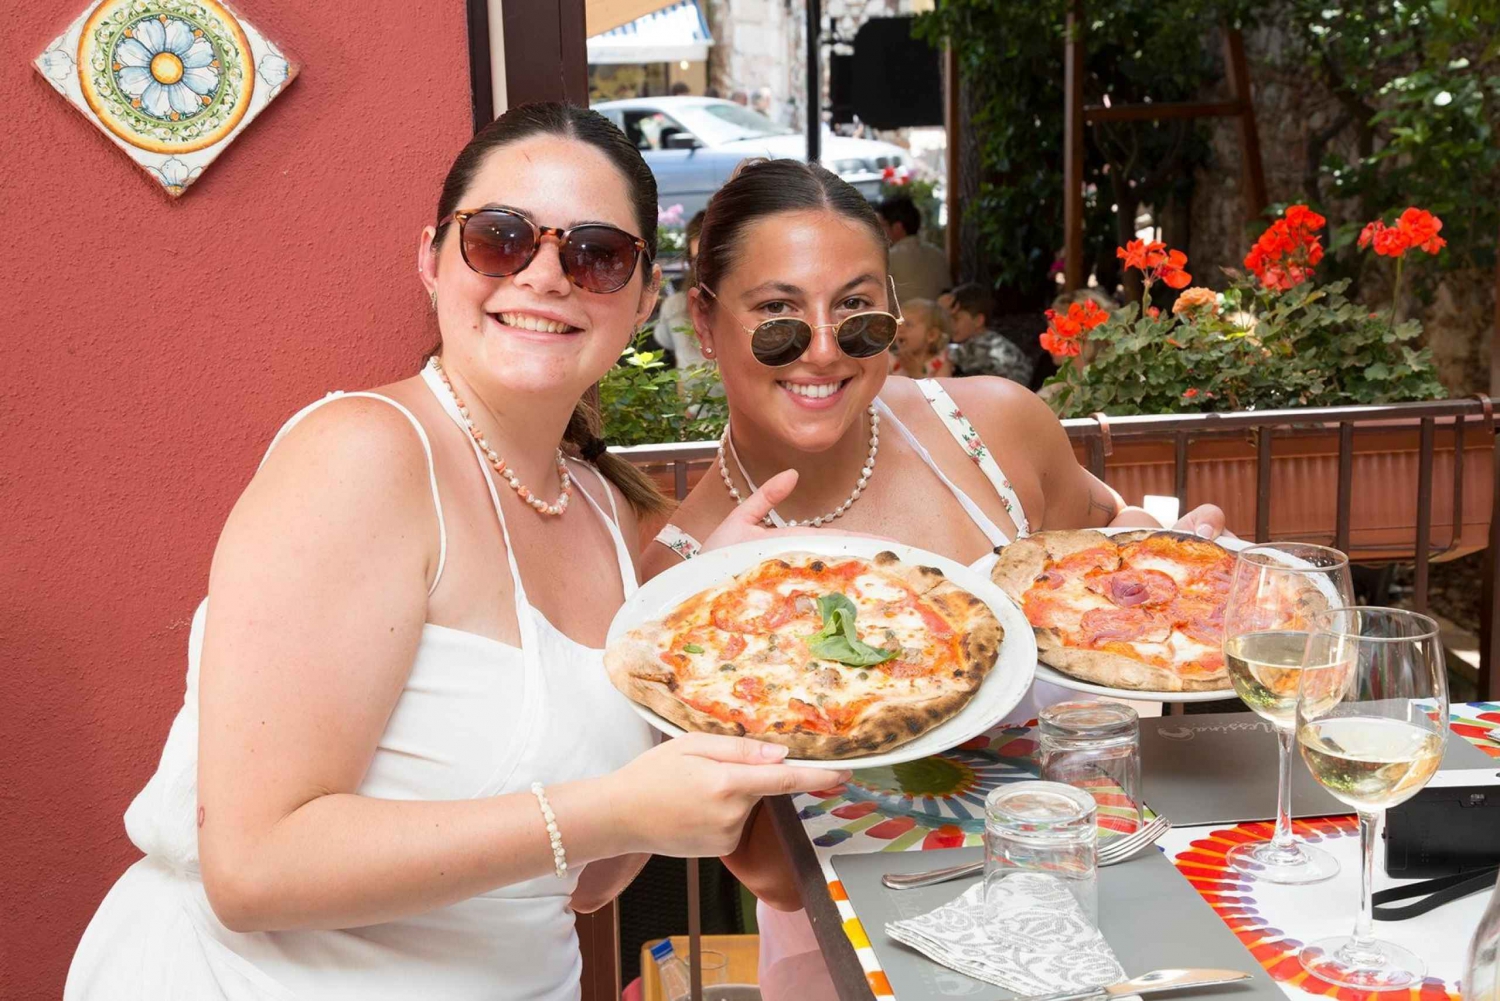 Taormina : Cours de fabrication de pizzas